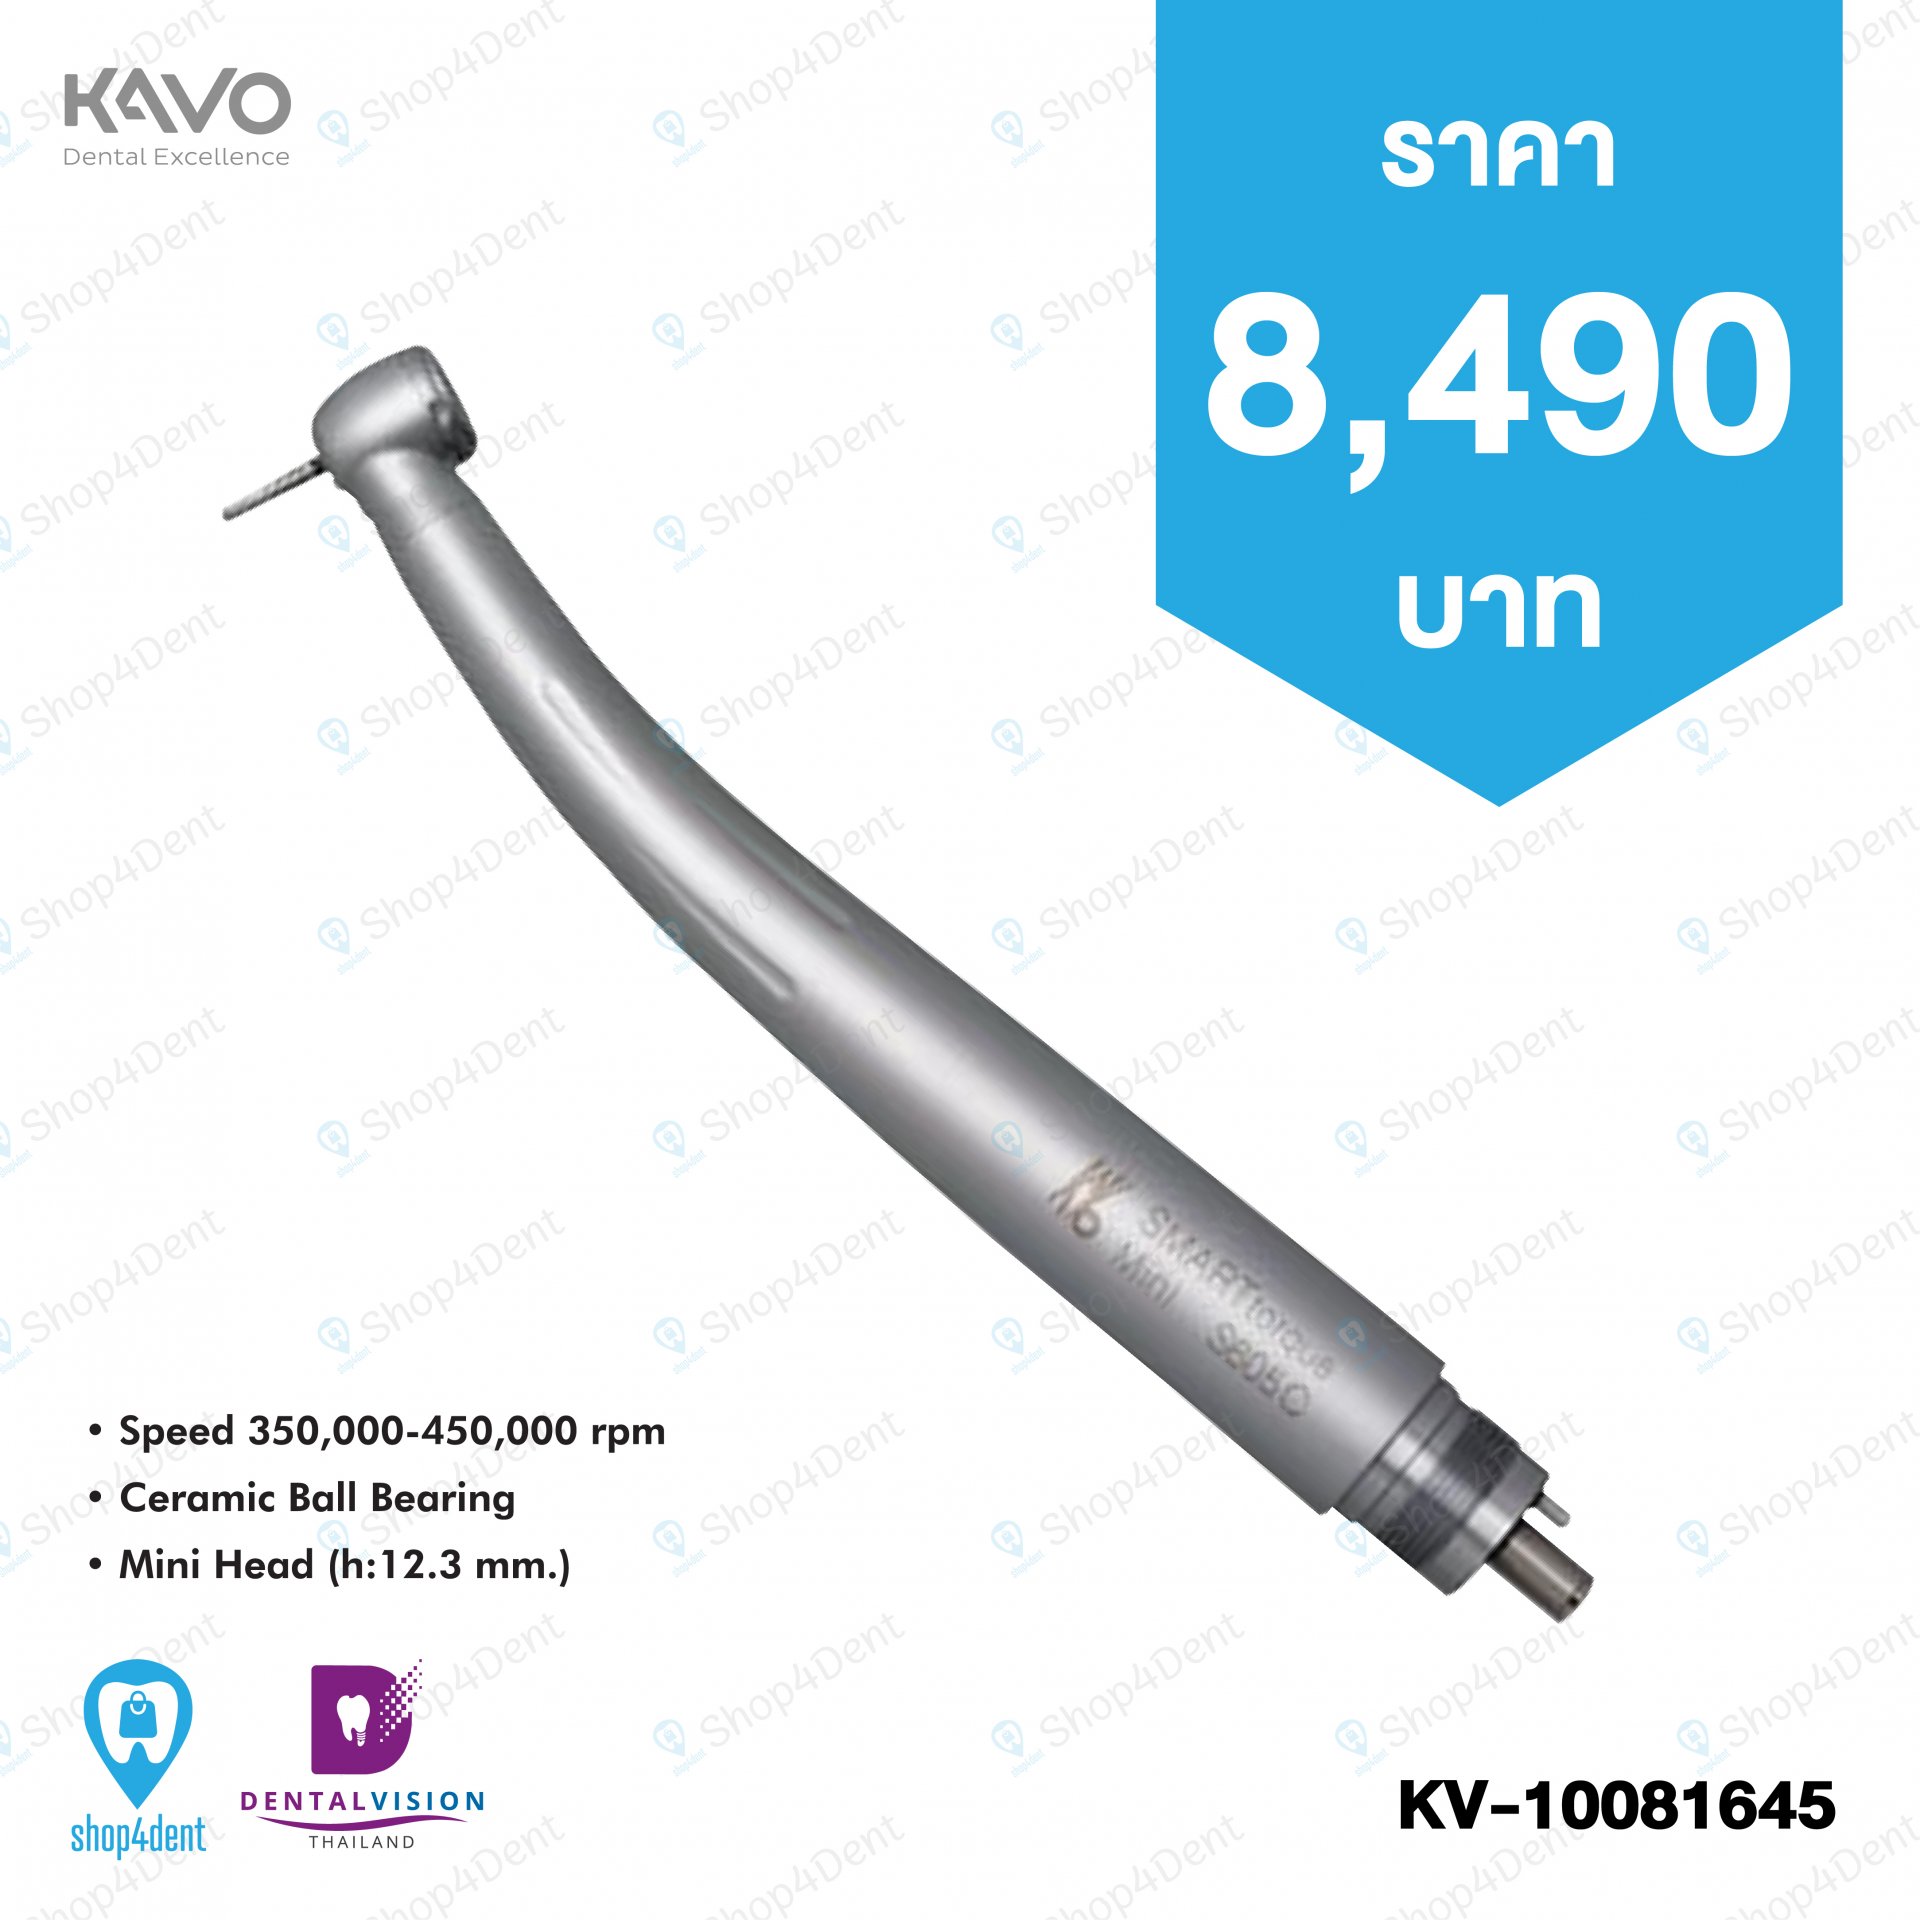 KaVo SMART Torque Mini S605 C